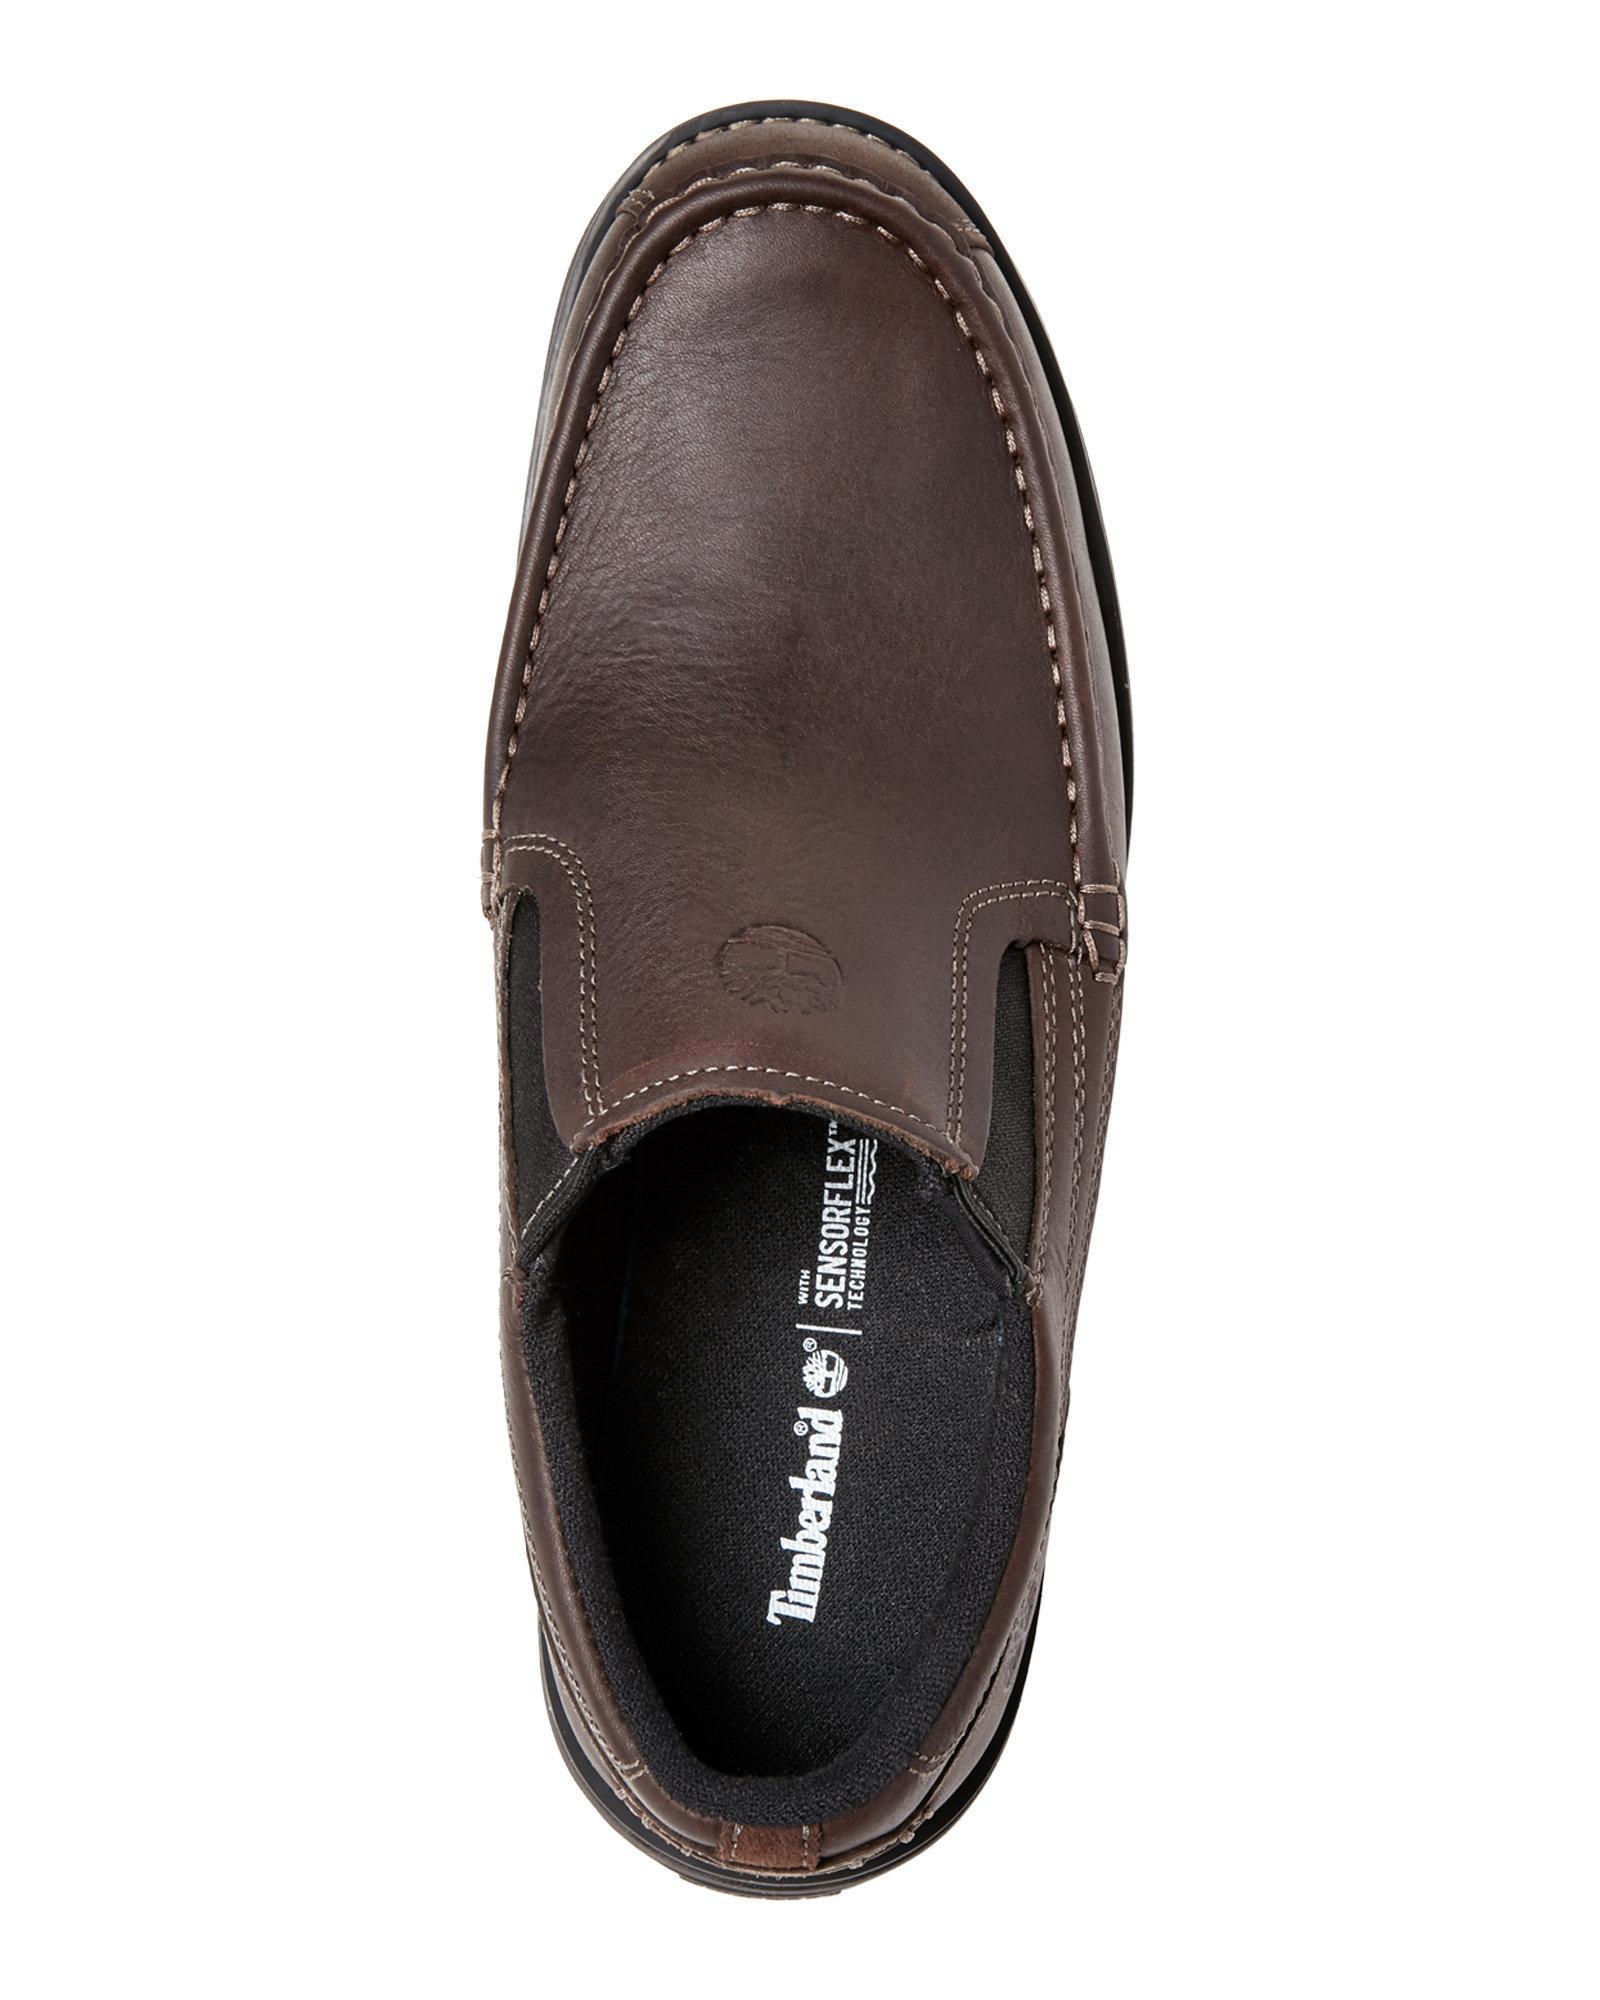 Lyst - Timberland Brown Heston Waterproof Slip On Shoes in Brown for Men